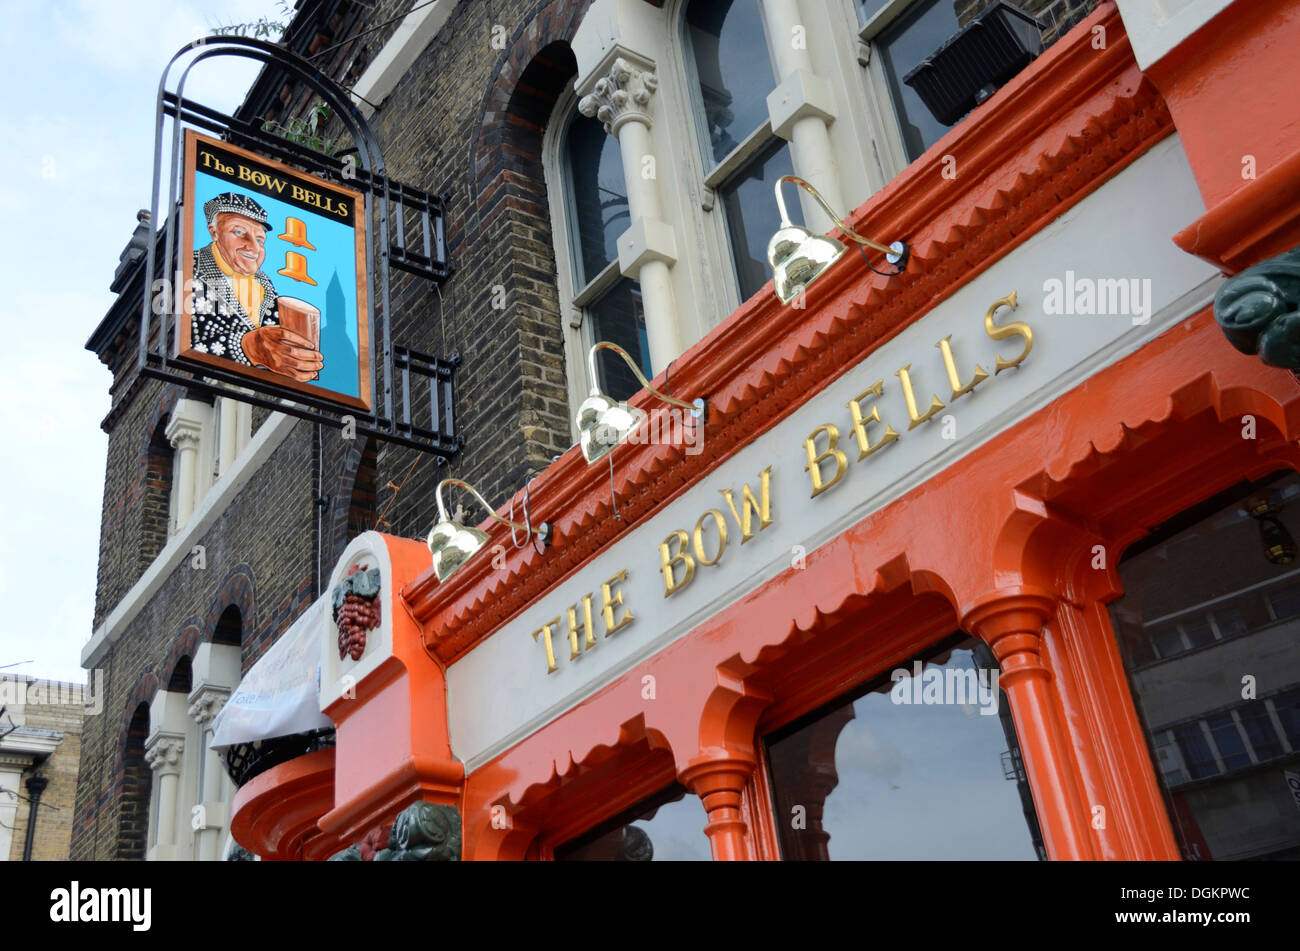 The Bow Bells pub. Stock Photo